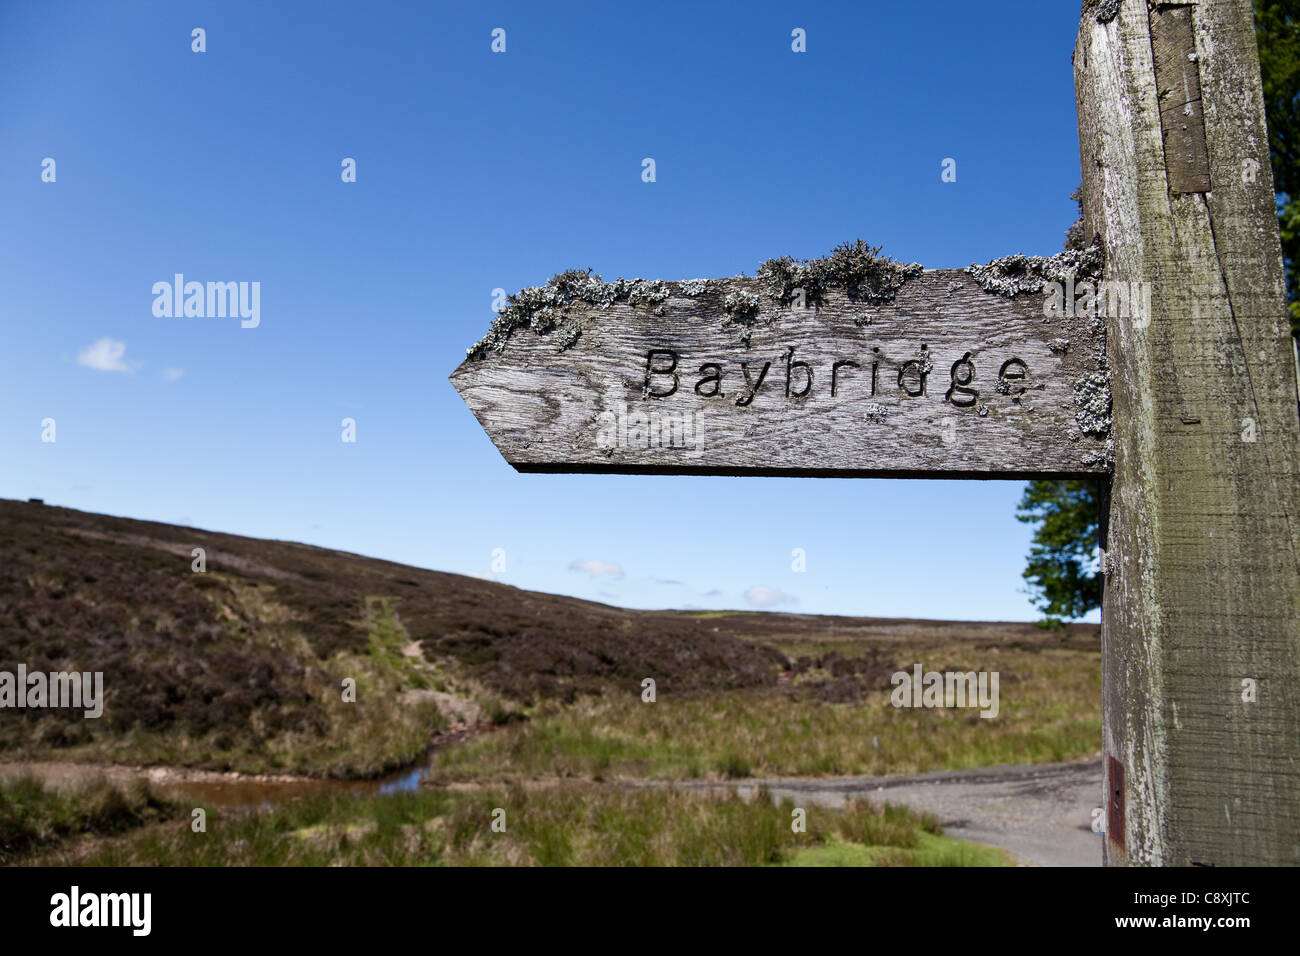 Wooden Countryside footpath sign, Baybridge, Weardale, Blanchland, Northumberland, England. UK Stock Photo